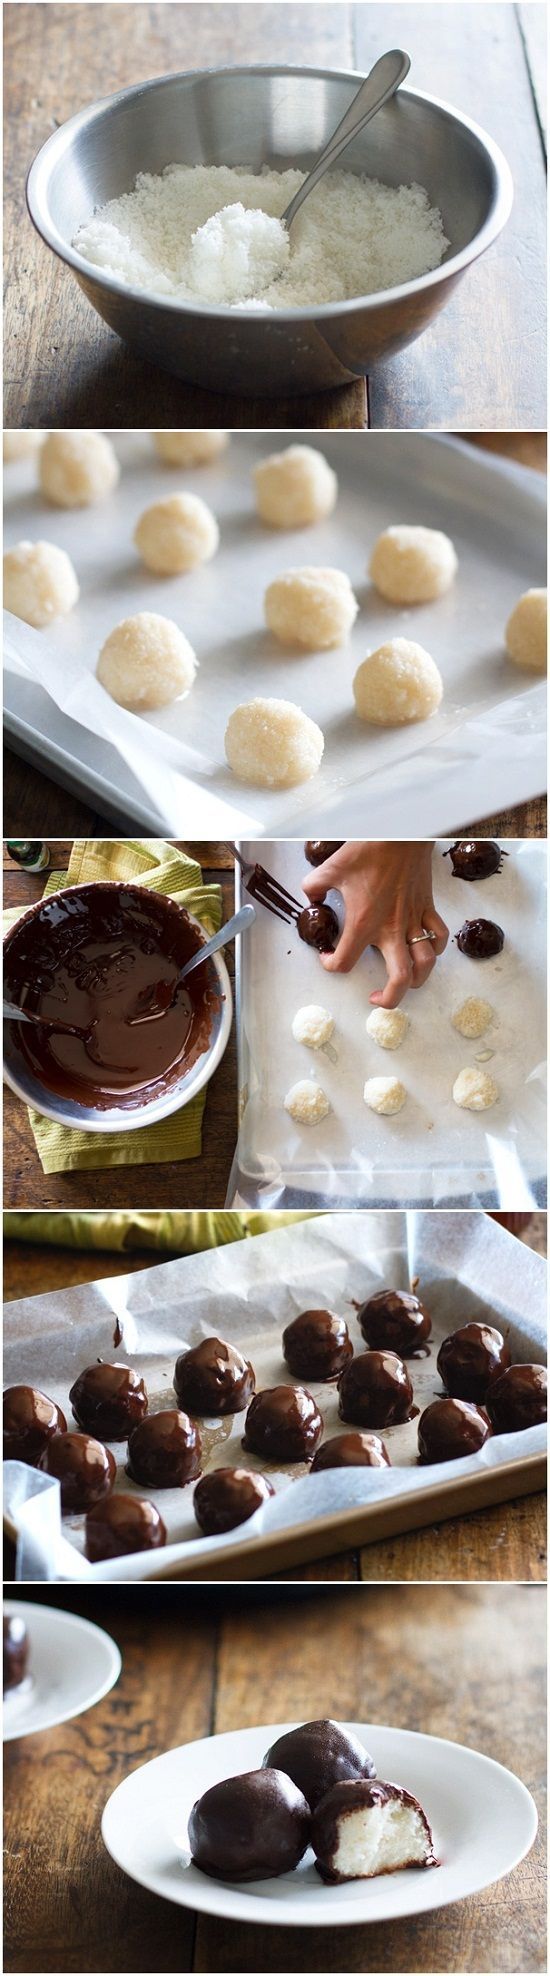 Coconut Chocolate Balls.  U